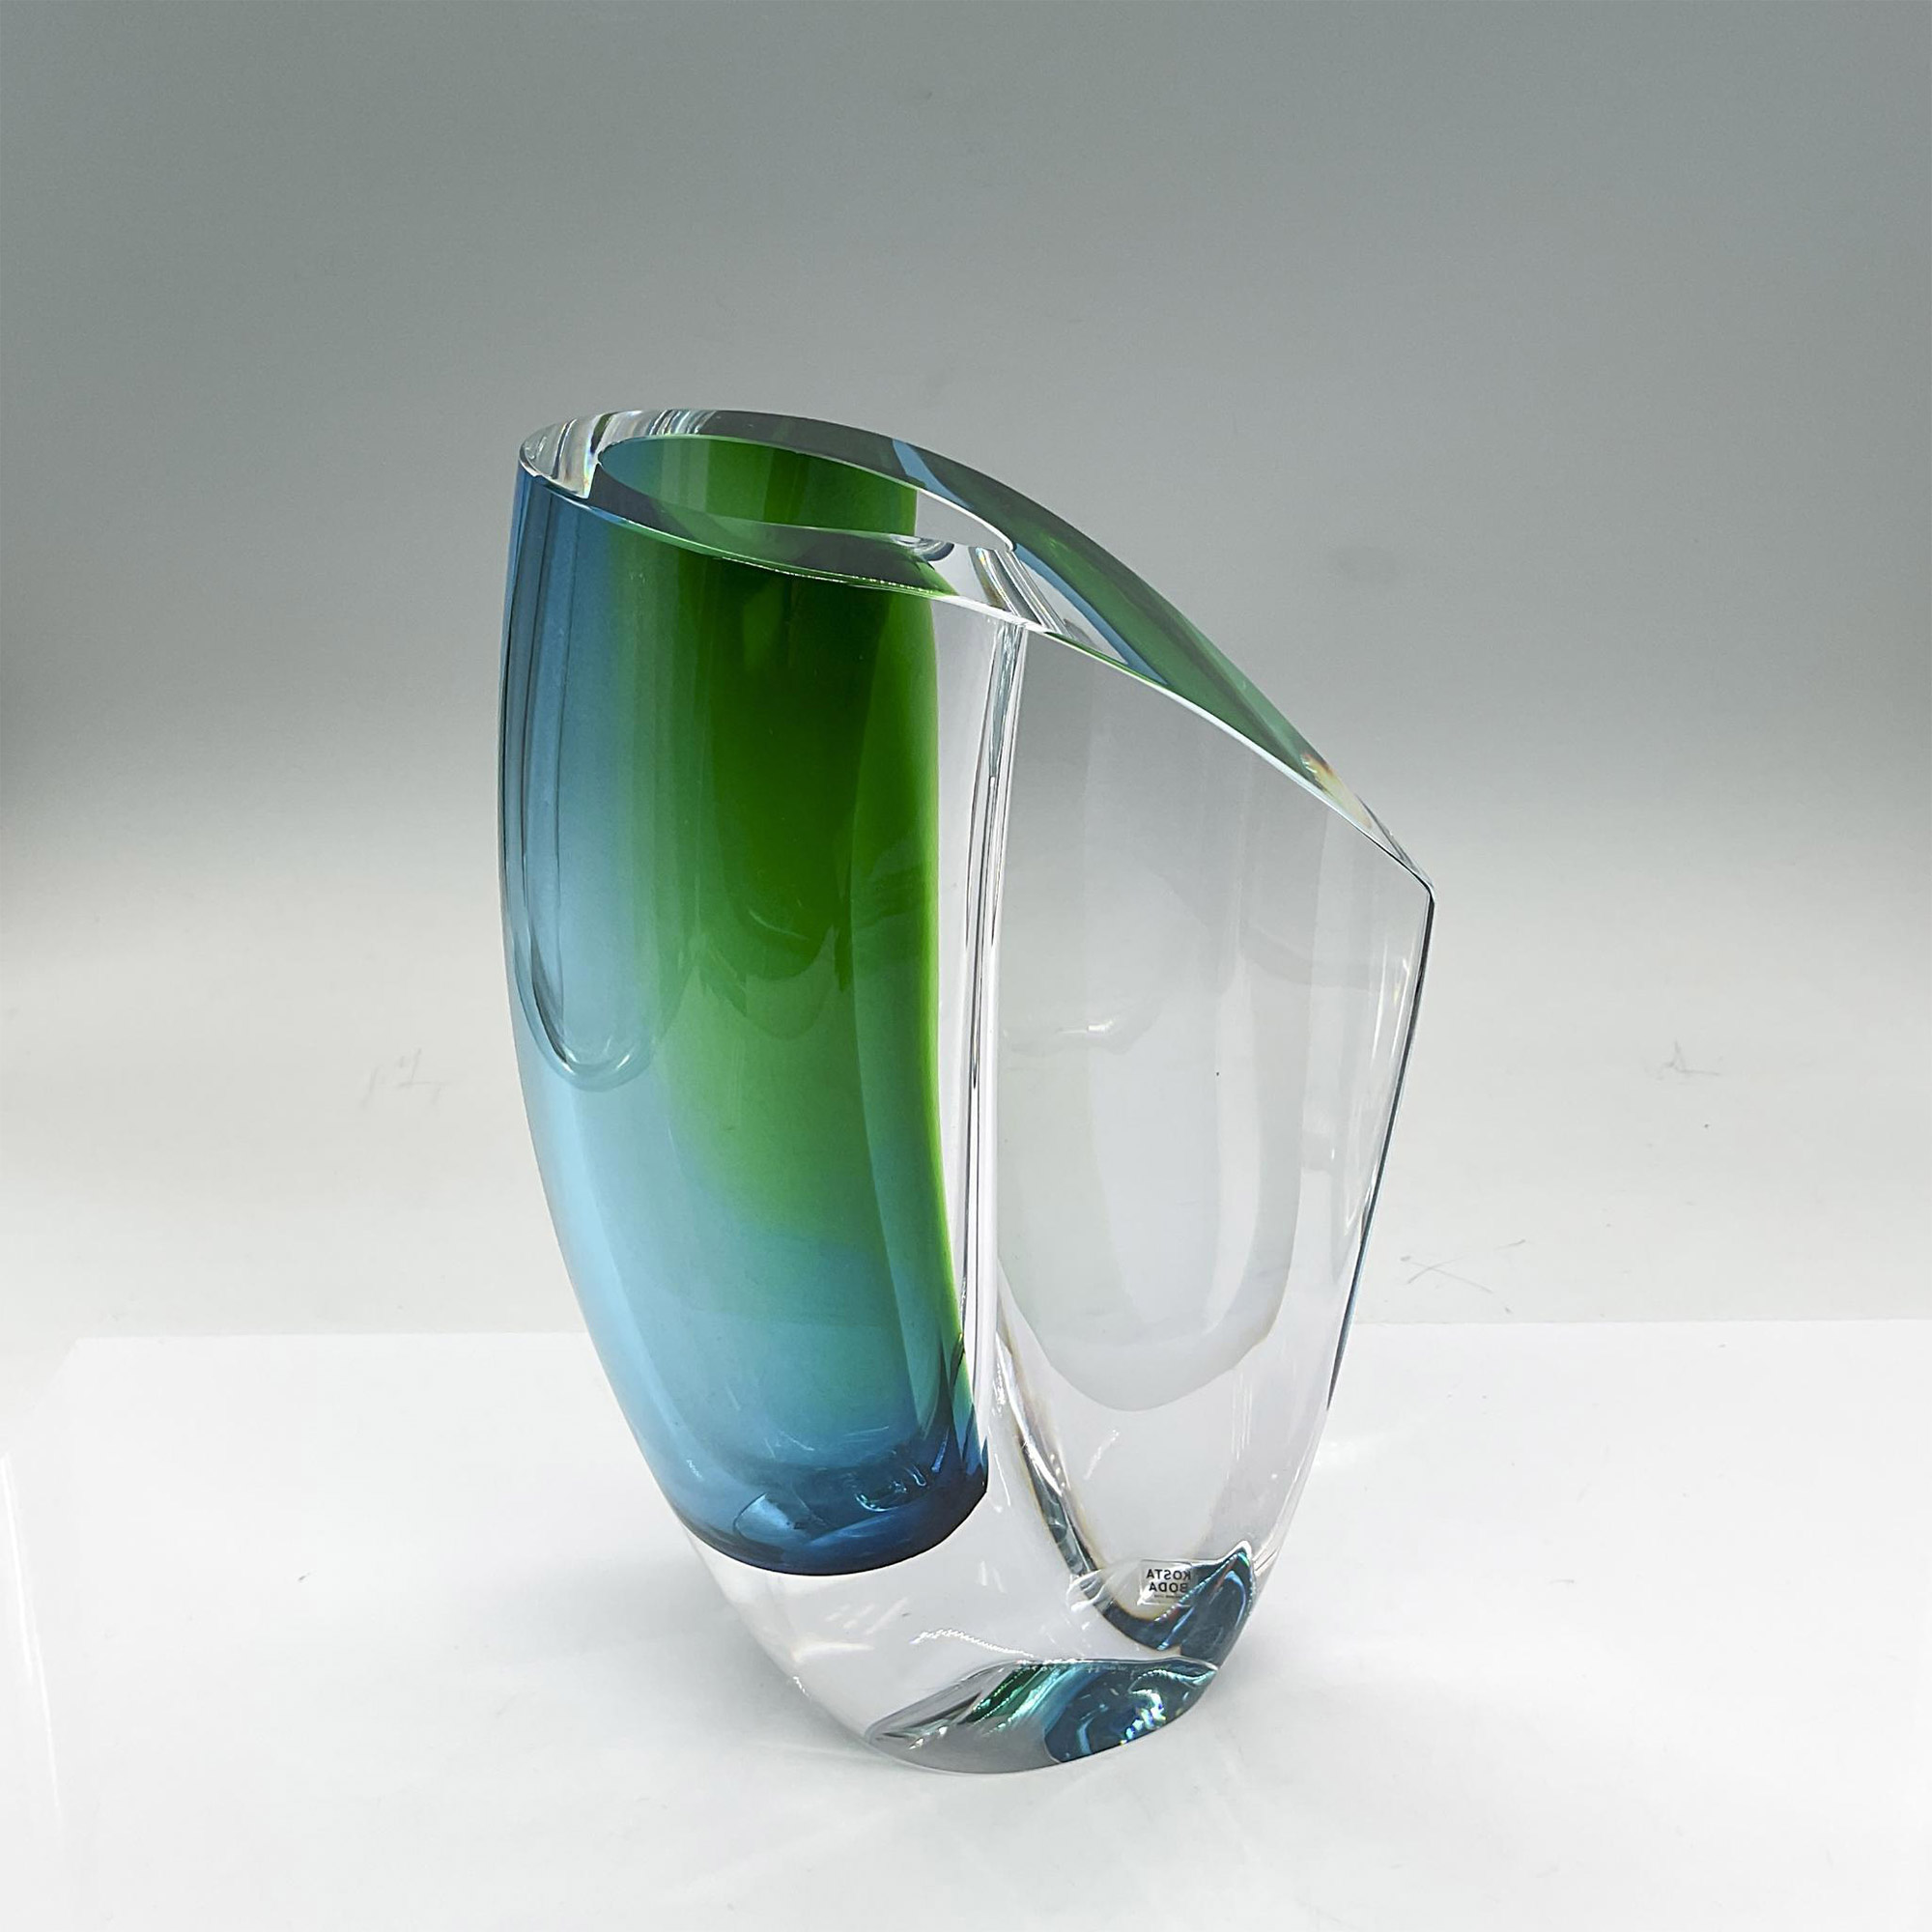 Kosta Boda Glass Vase, Saraband Blue and Green - Image 2 of 3